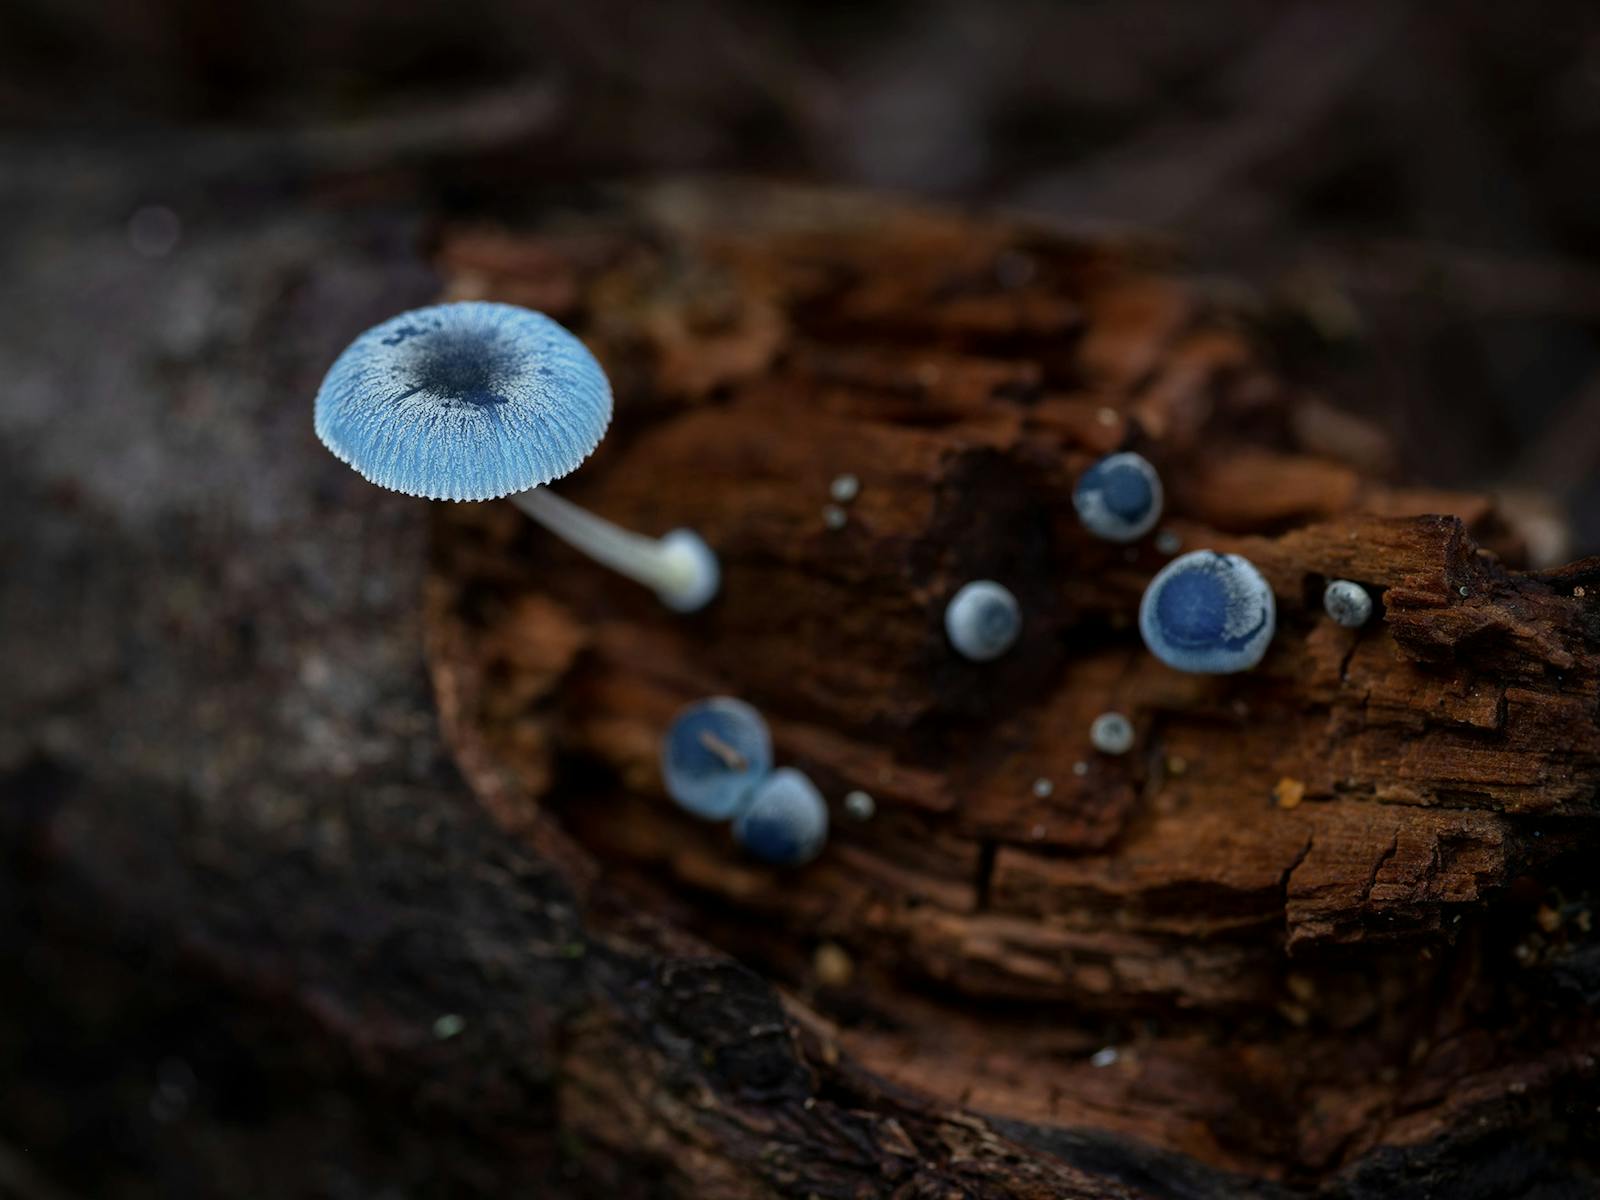 The delightful blue "Pixie's Parasol" is a photographic highlight in Tasmania's Tarkine rainforest